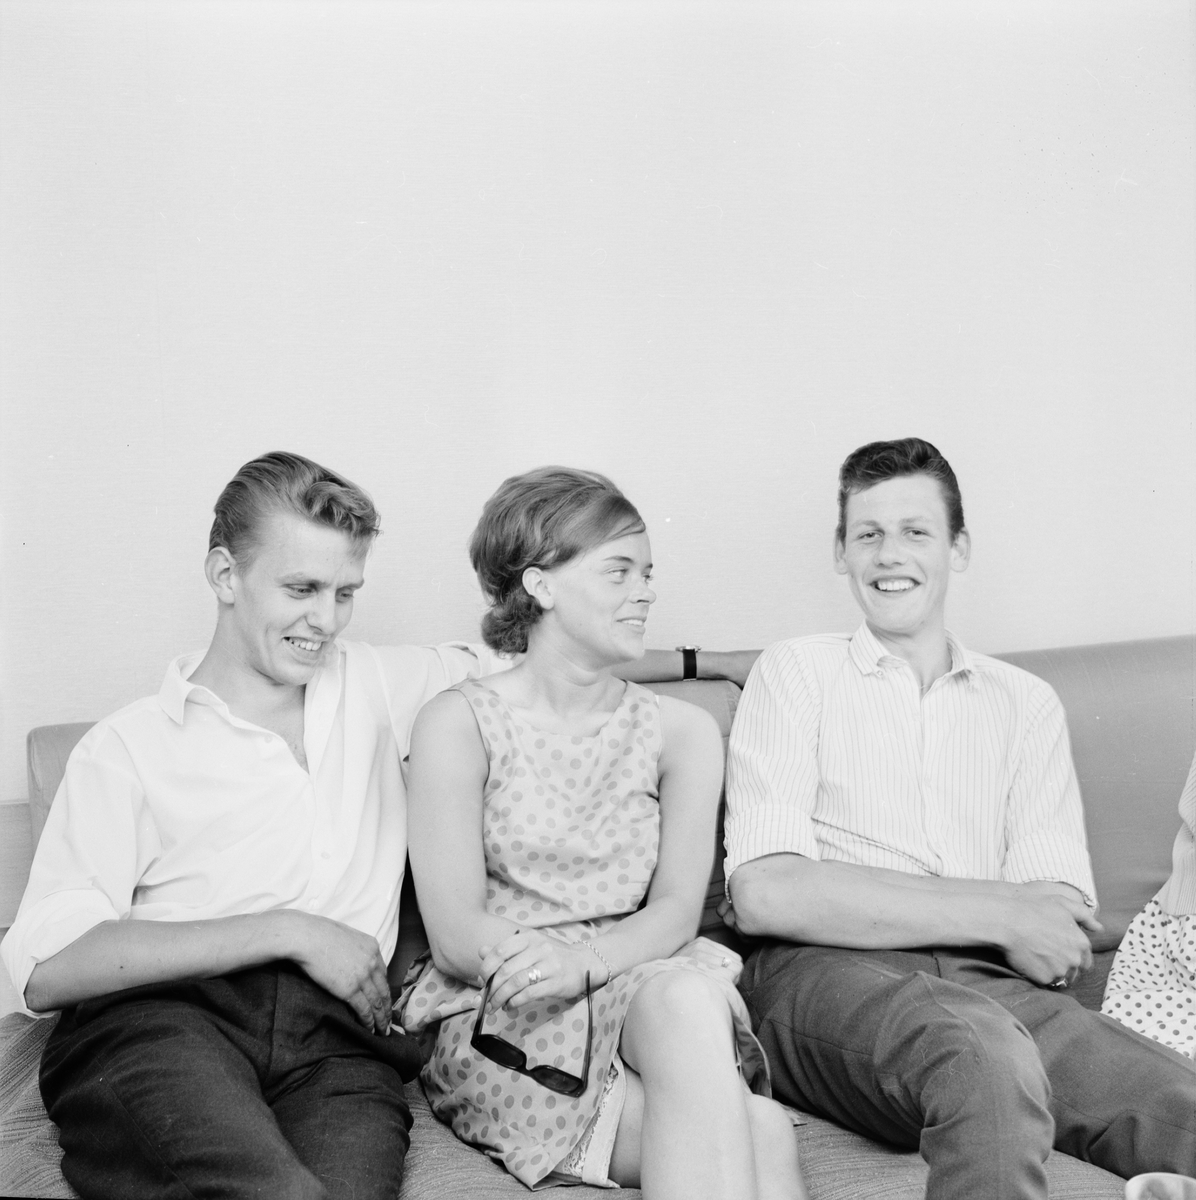 Aftonbladet, skrattande ungdom, Uppsala juli 1964